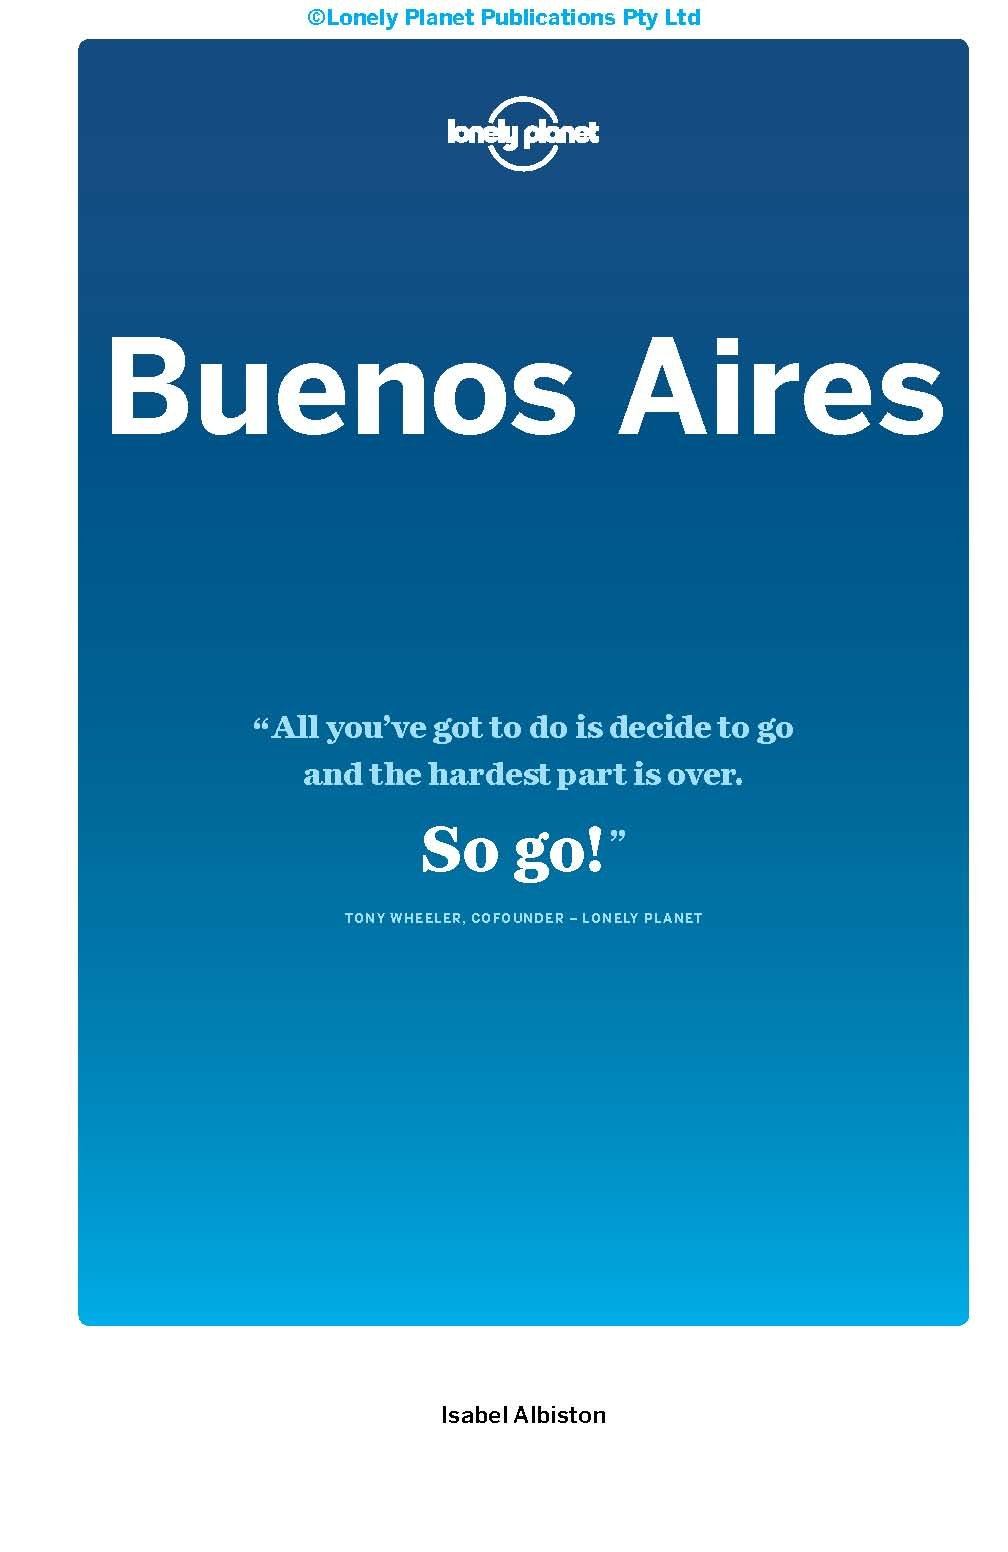 Guide de voyage (en anglais) - Buenos Aires | Lonely Planet guide de voyage Lonely Planet 